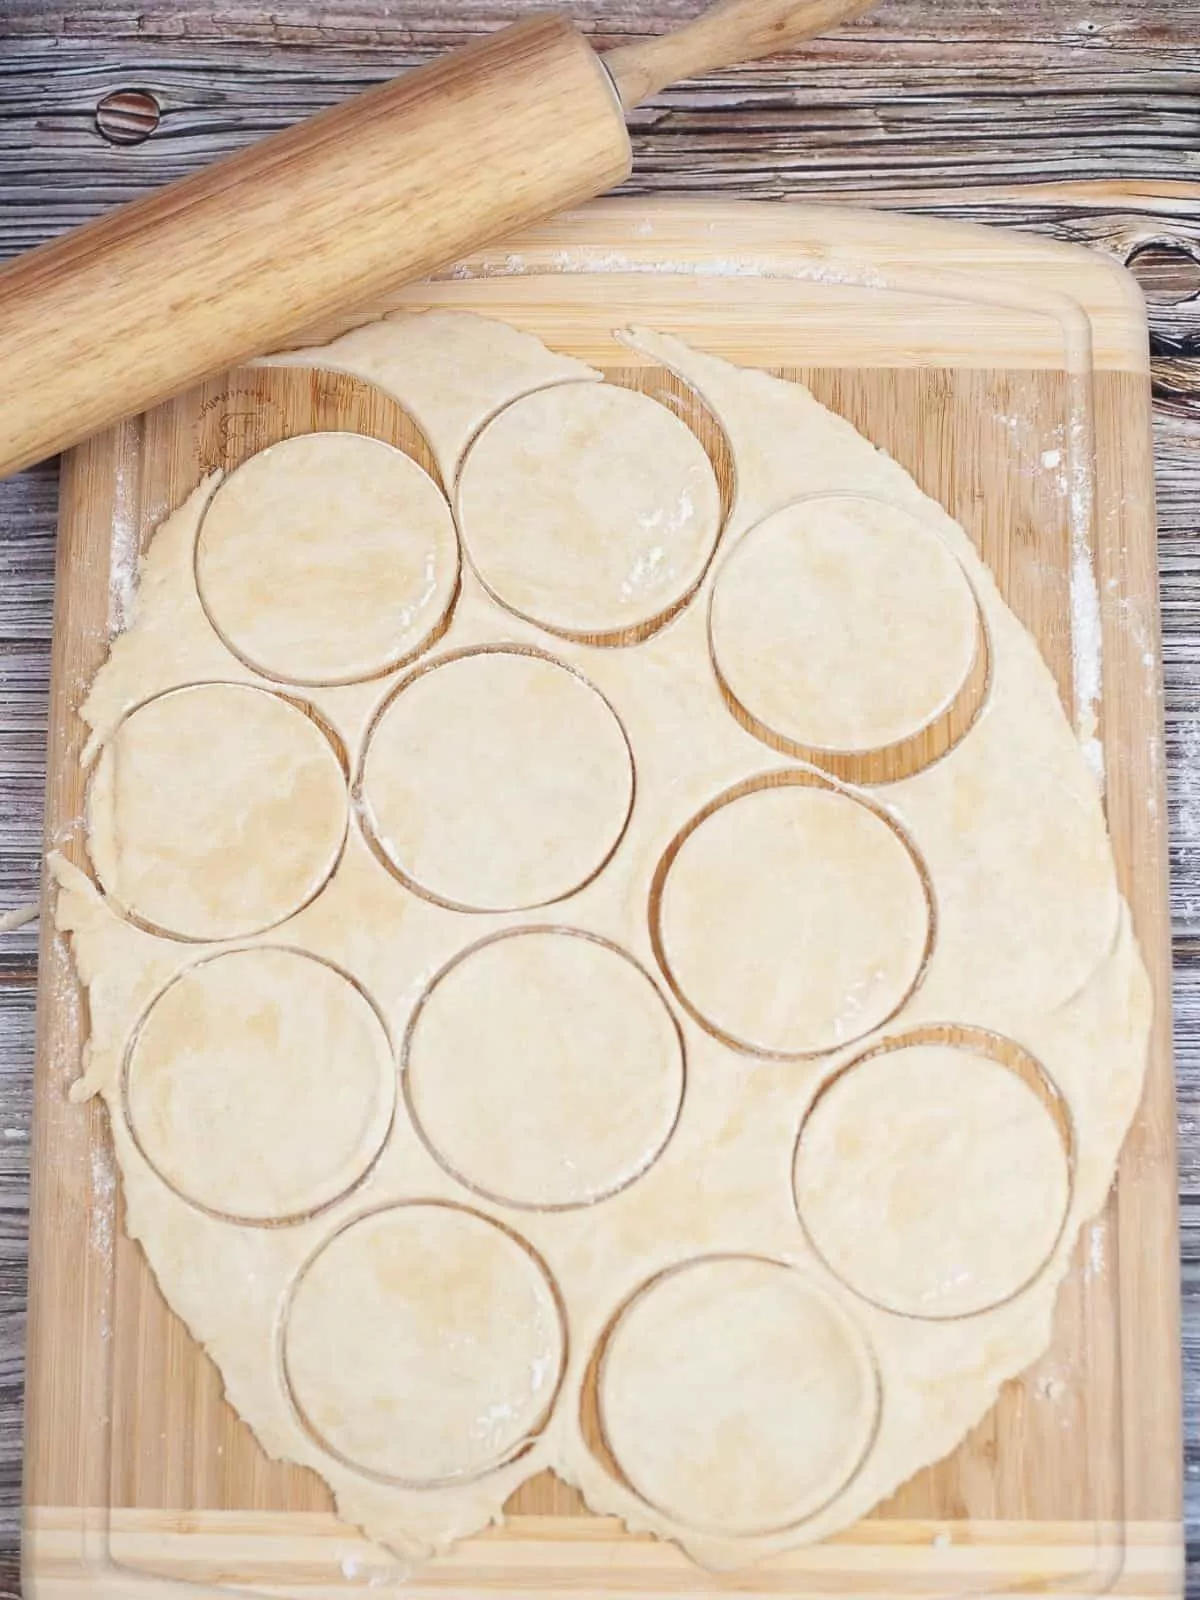 pie dough circles cut out on cutting board.